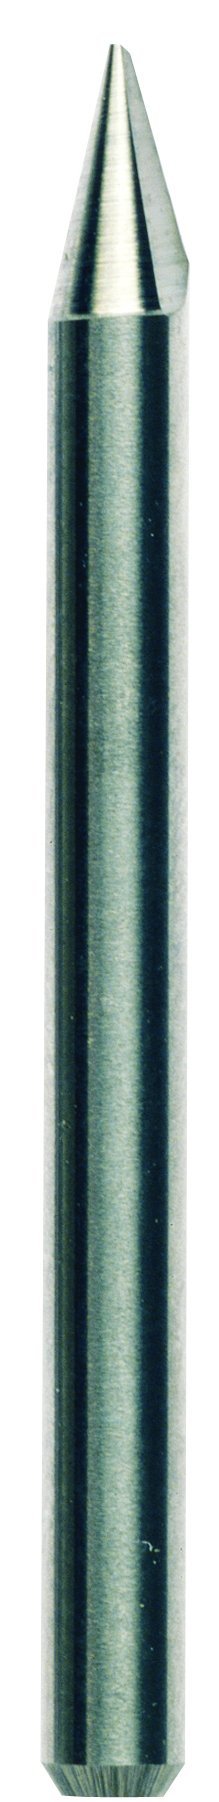 Proxxon 28765 Engraving stylus 0.5 mm